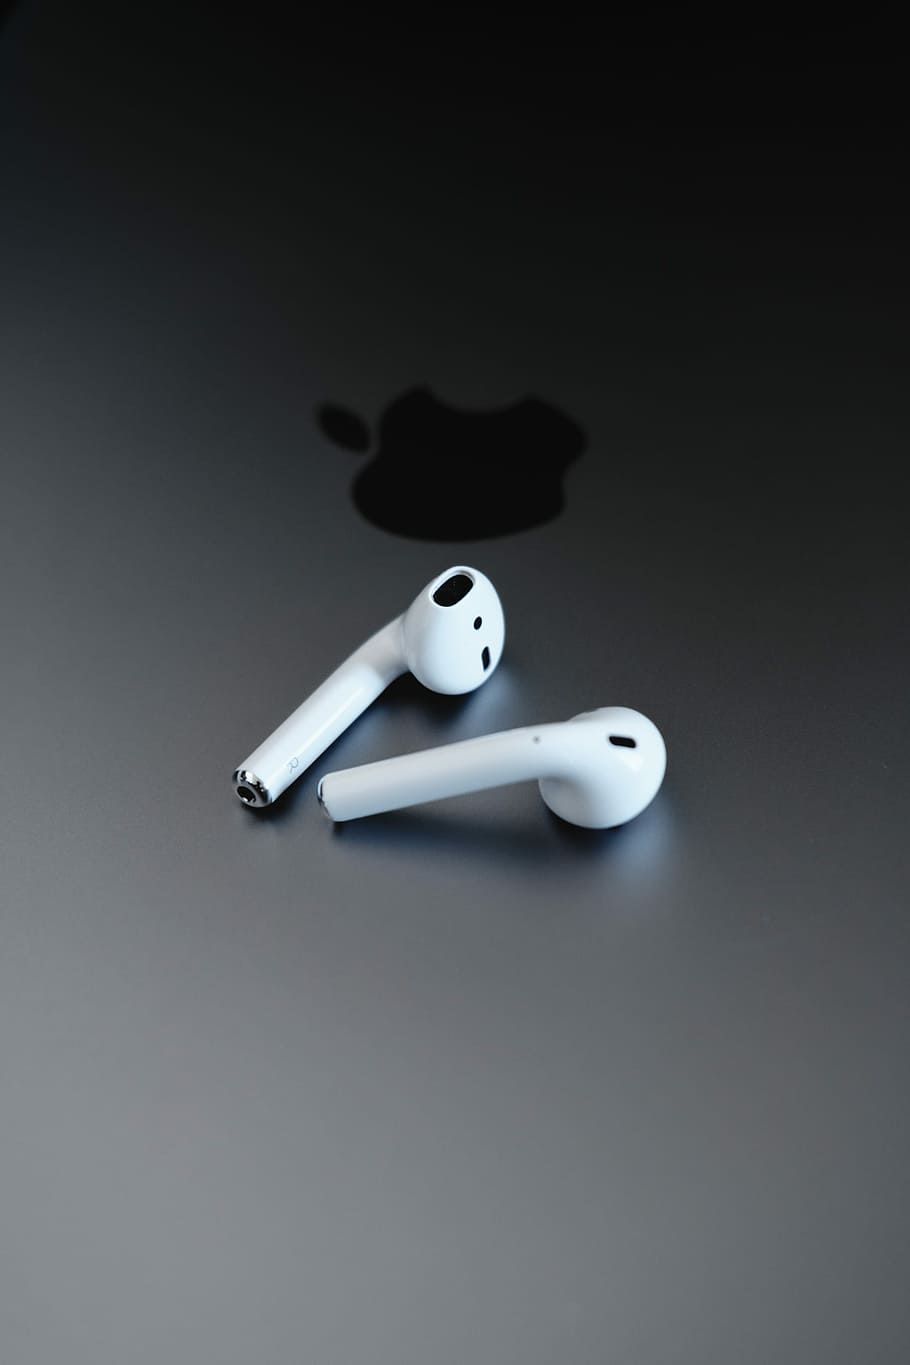 HD wallpaper: Apple EarPods on gray surface, Apple AirPods